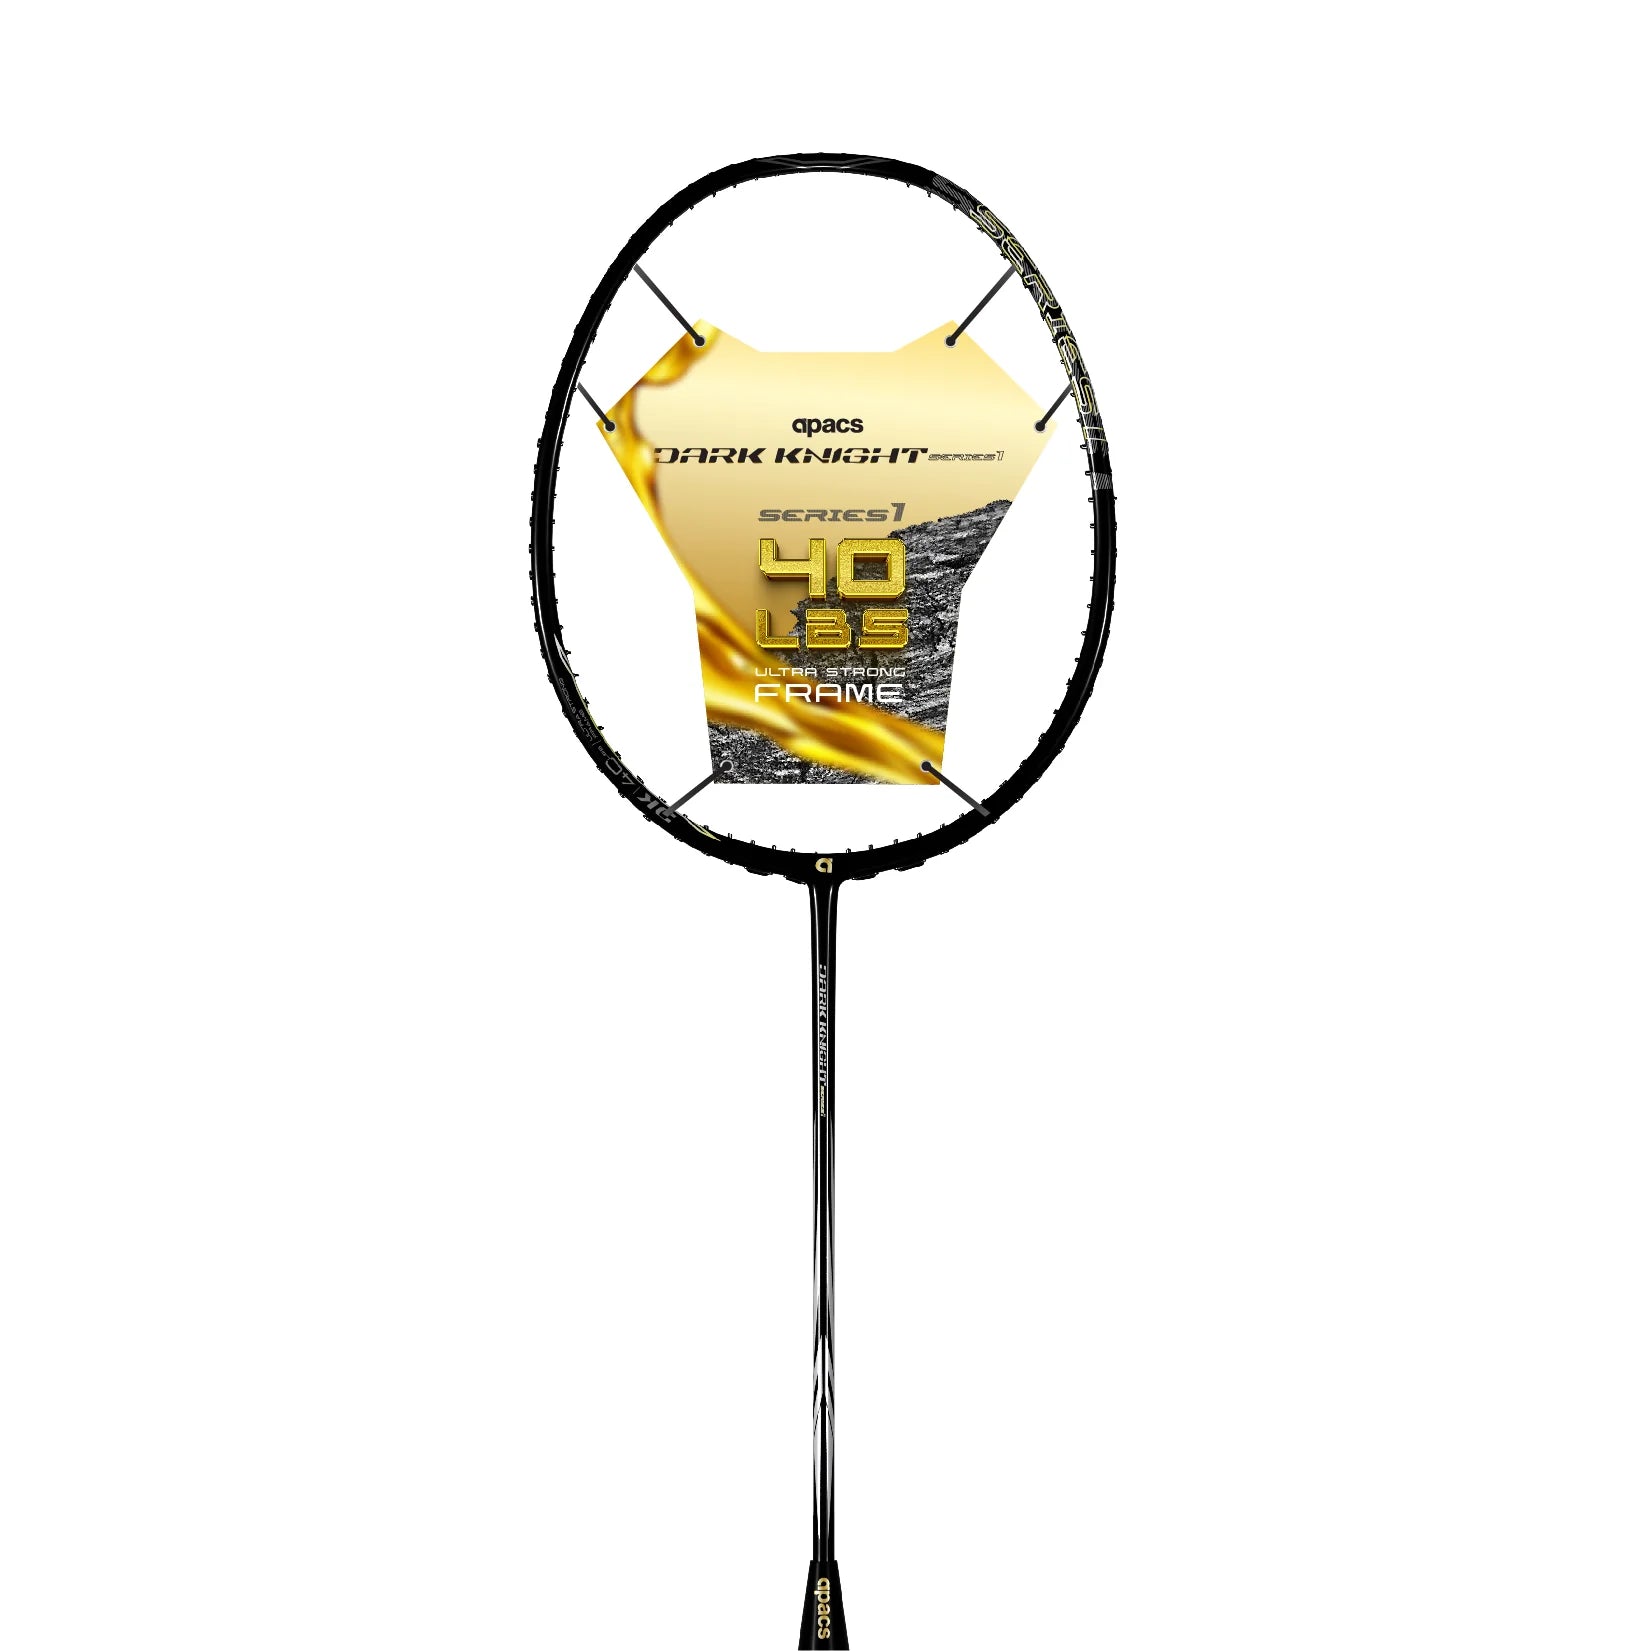 APACS Dark Knight Badminton Racket